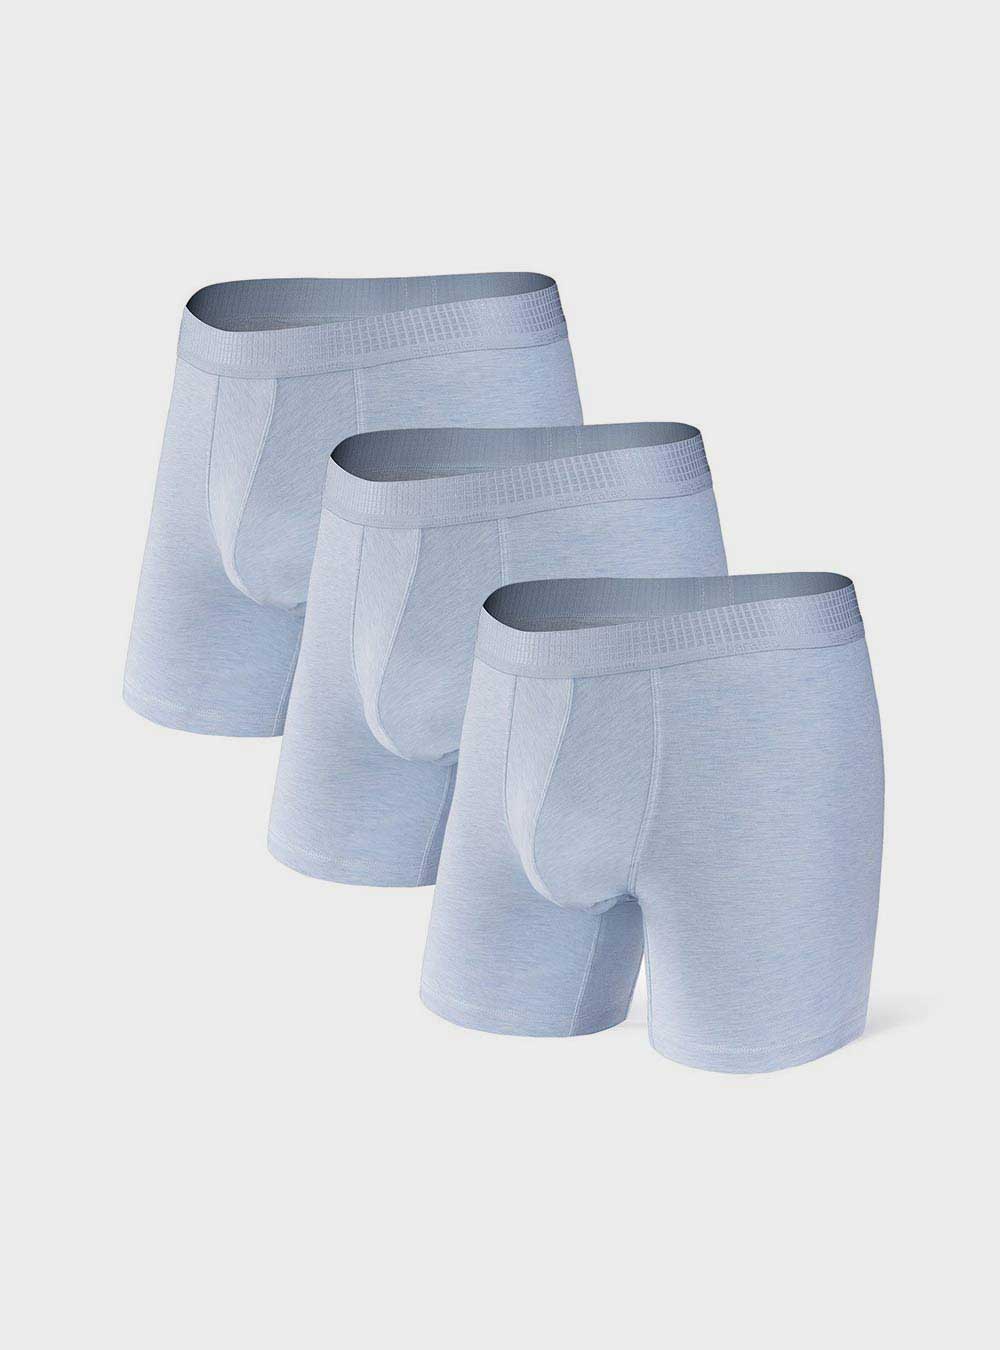 Separatec Men's High-end Micro Modal Dual Pouch Boxer Briefs Underwear